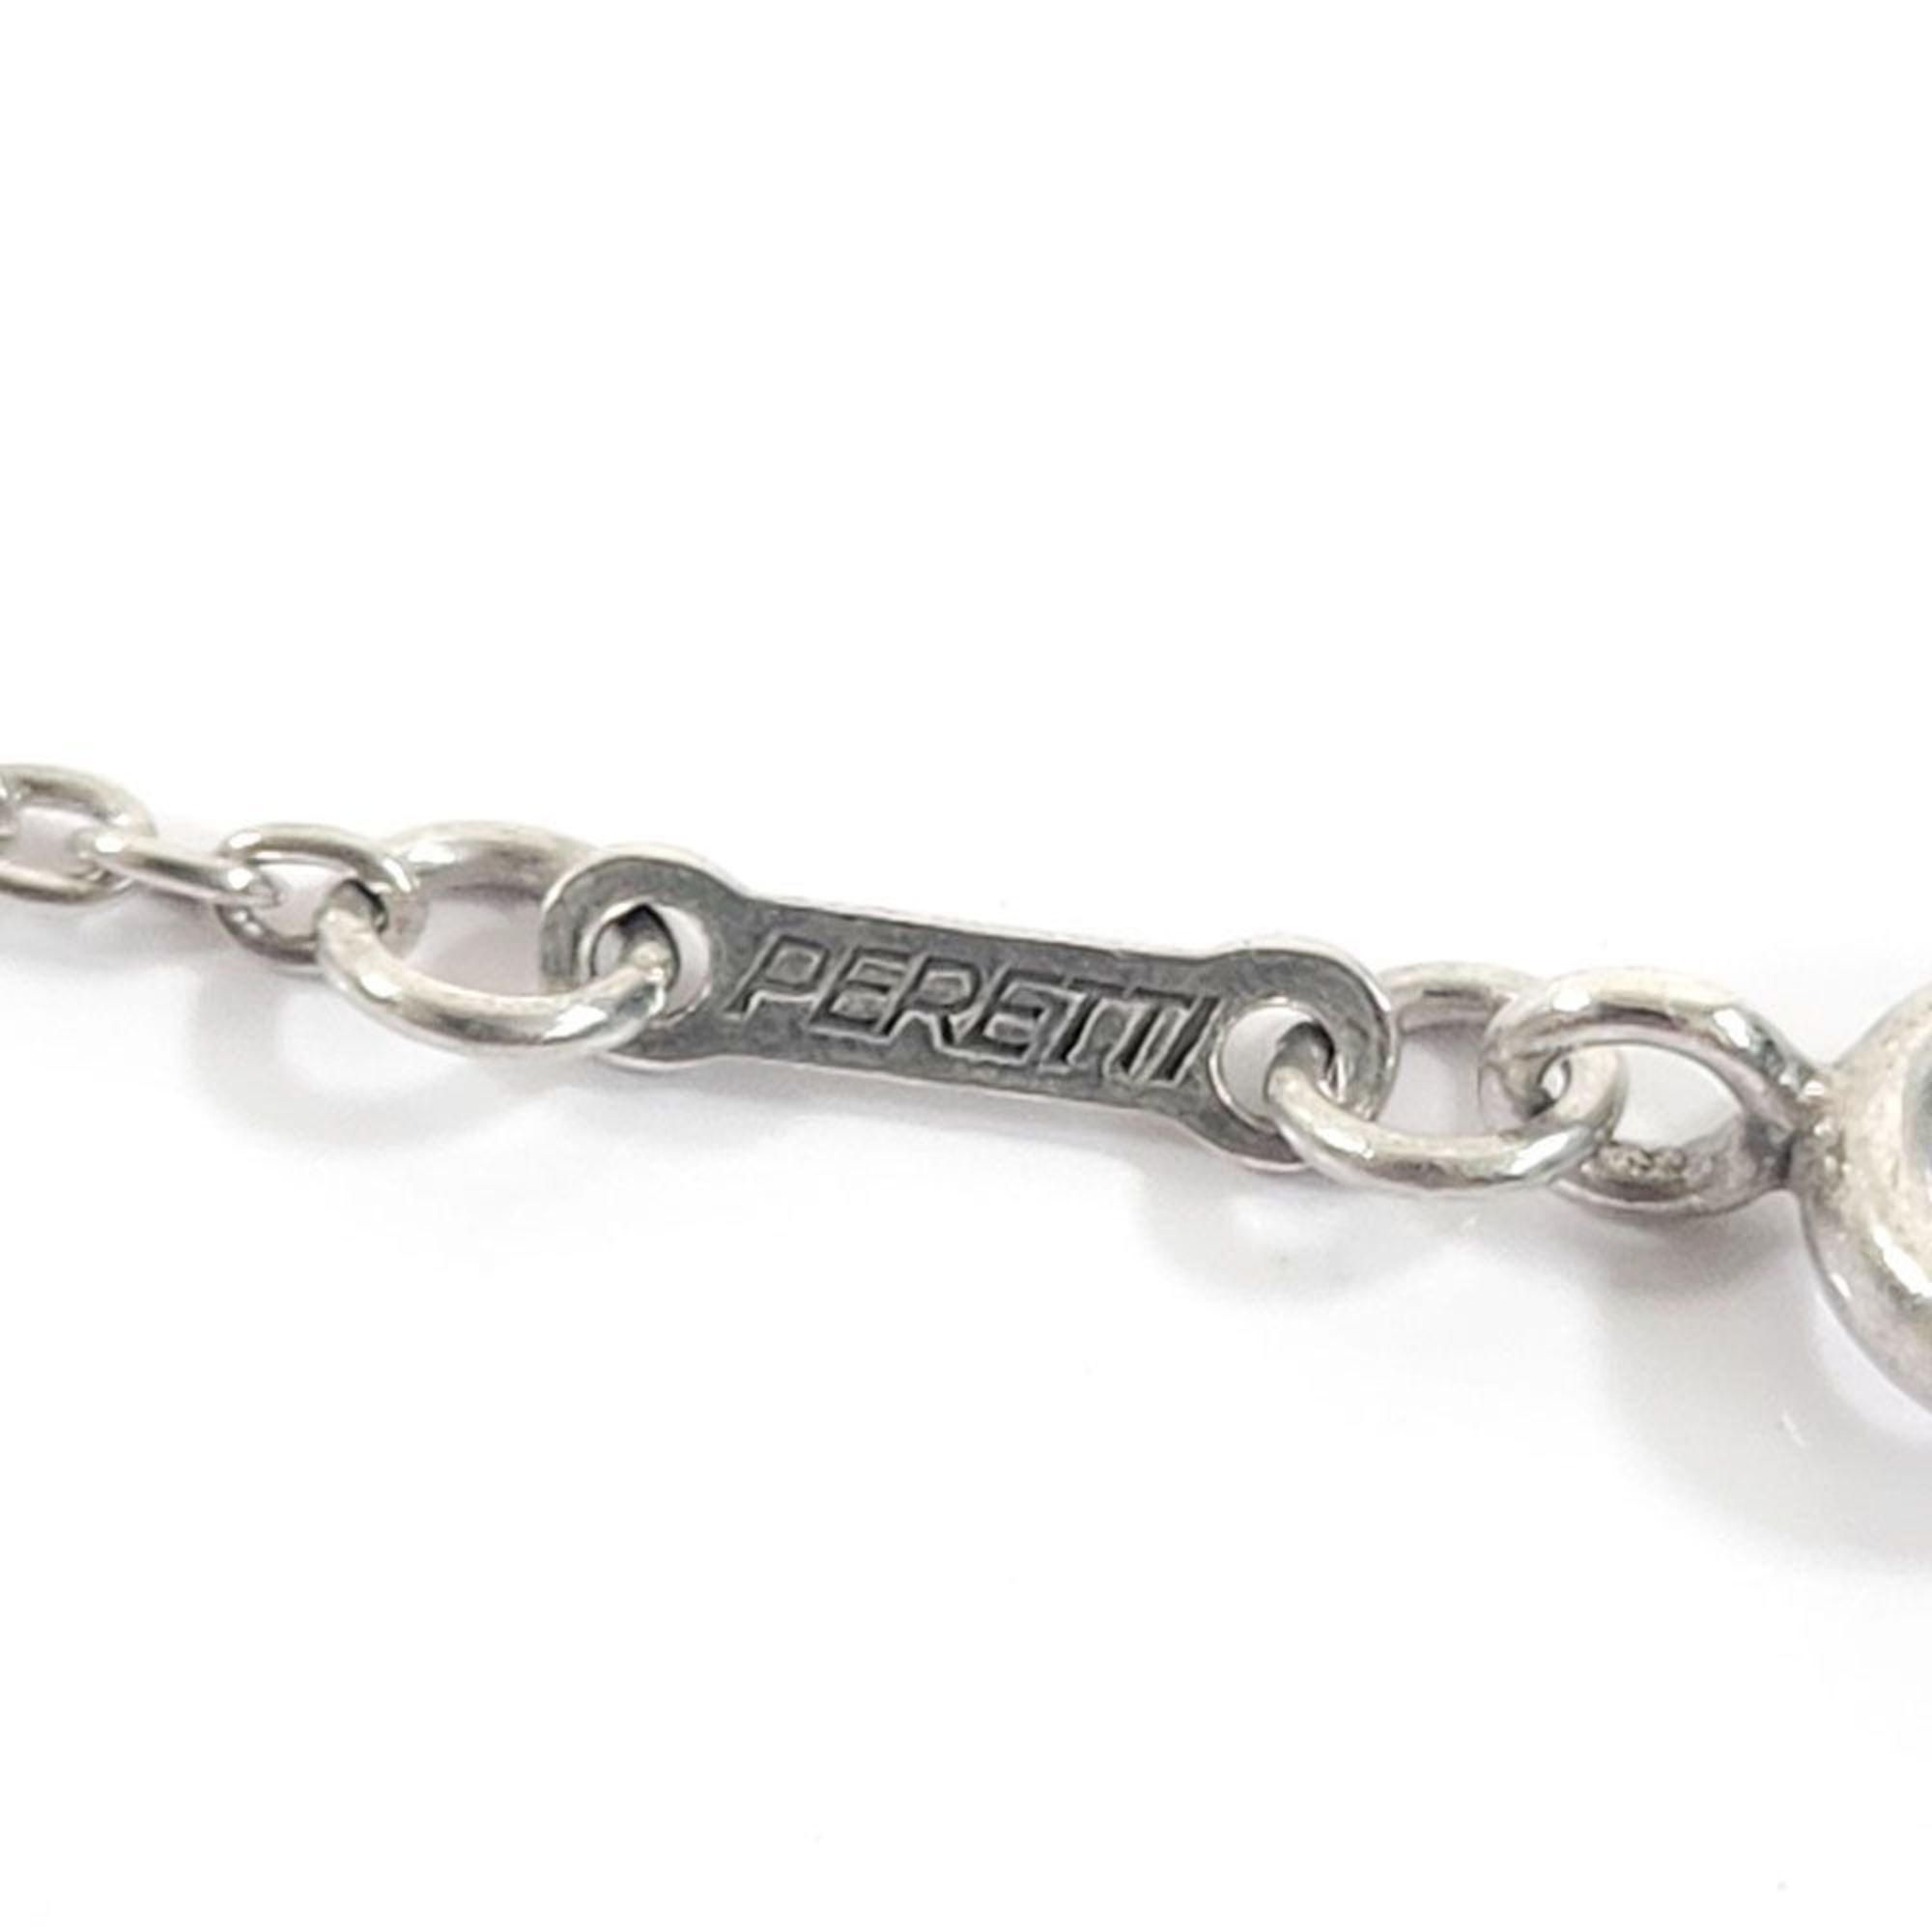 Tiffany & Co. Elsa Peretti 3-Row Heart Necklace Ag925 SV Silver Pendant Sterling